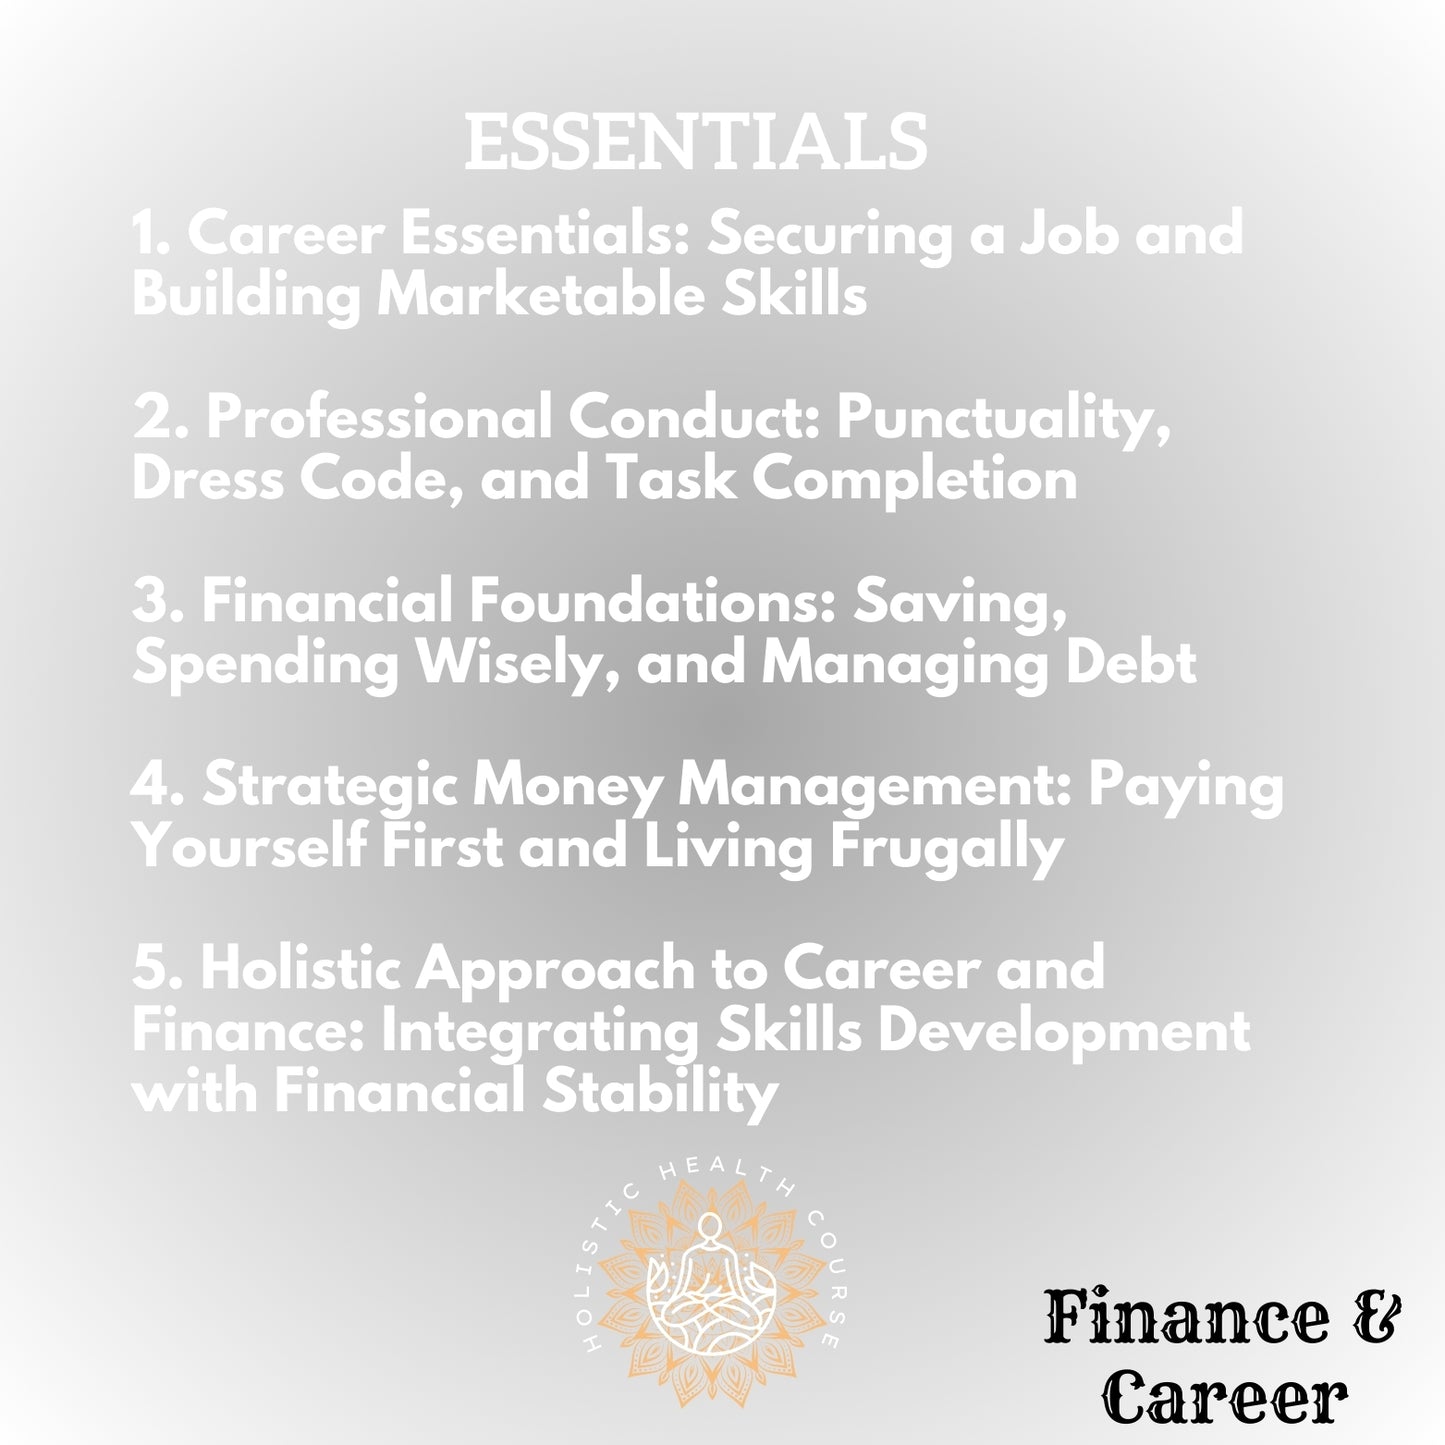 Holistic Financial & Career Health